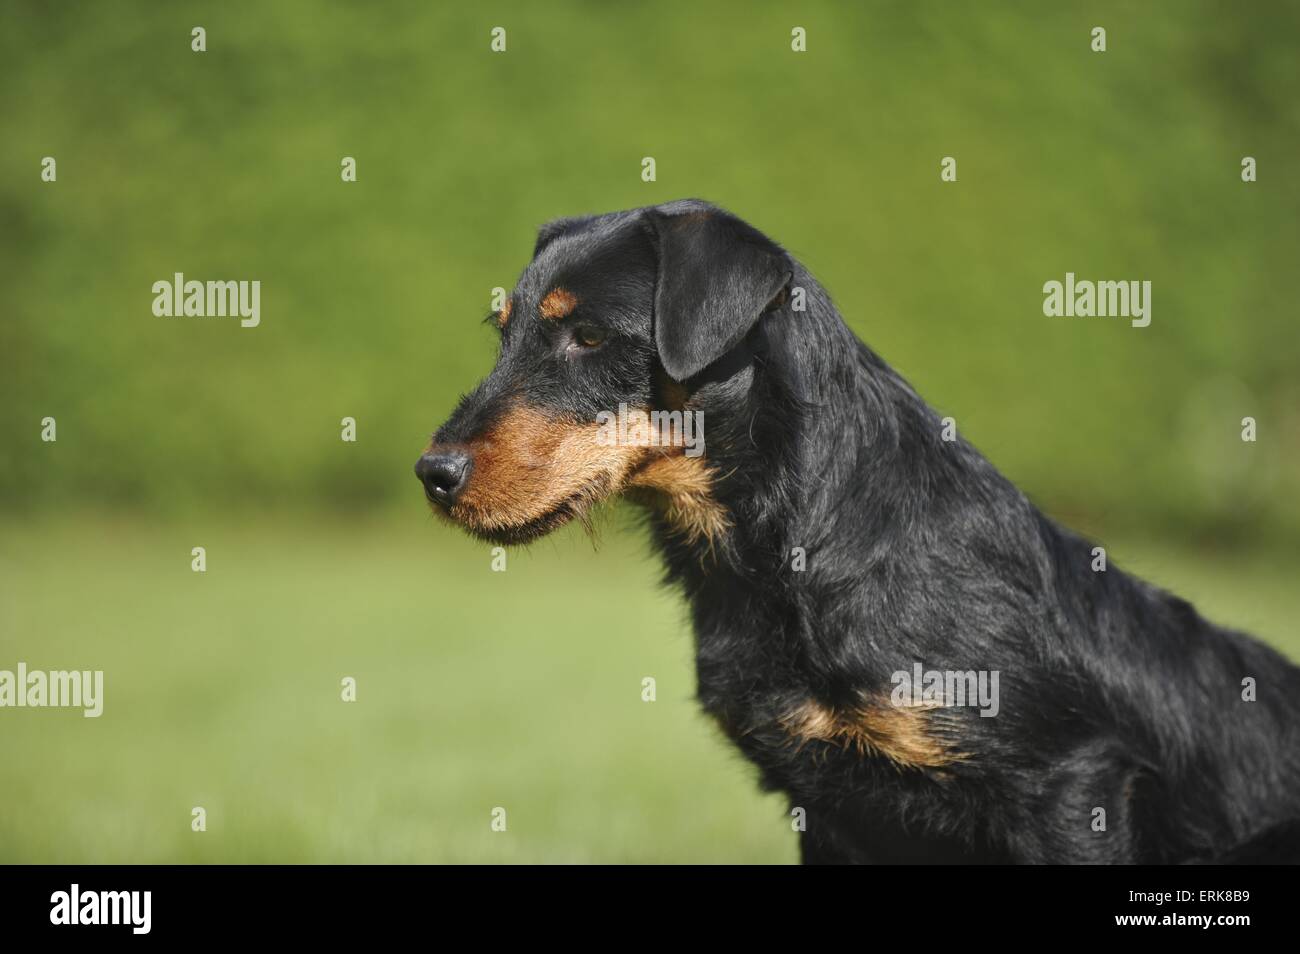 german hunting terrier portrait Stock Photo